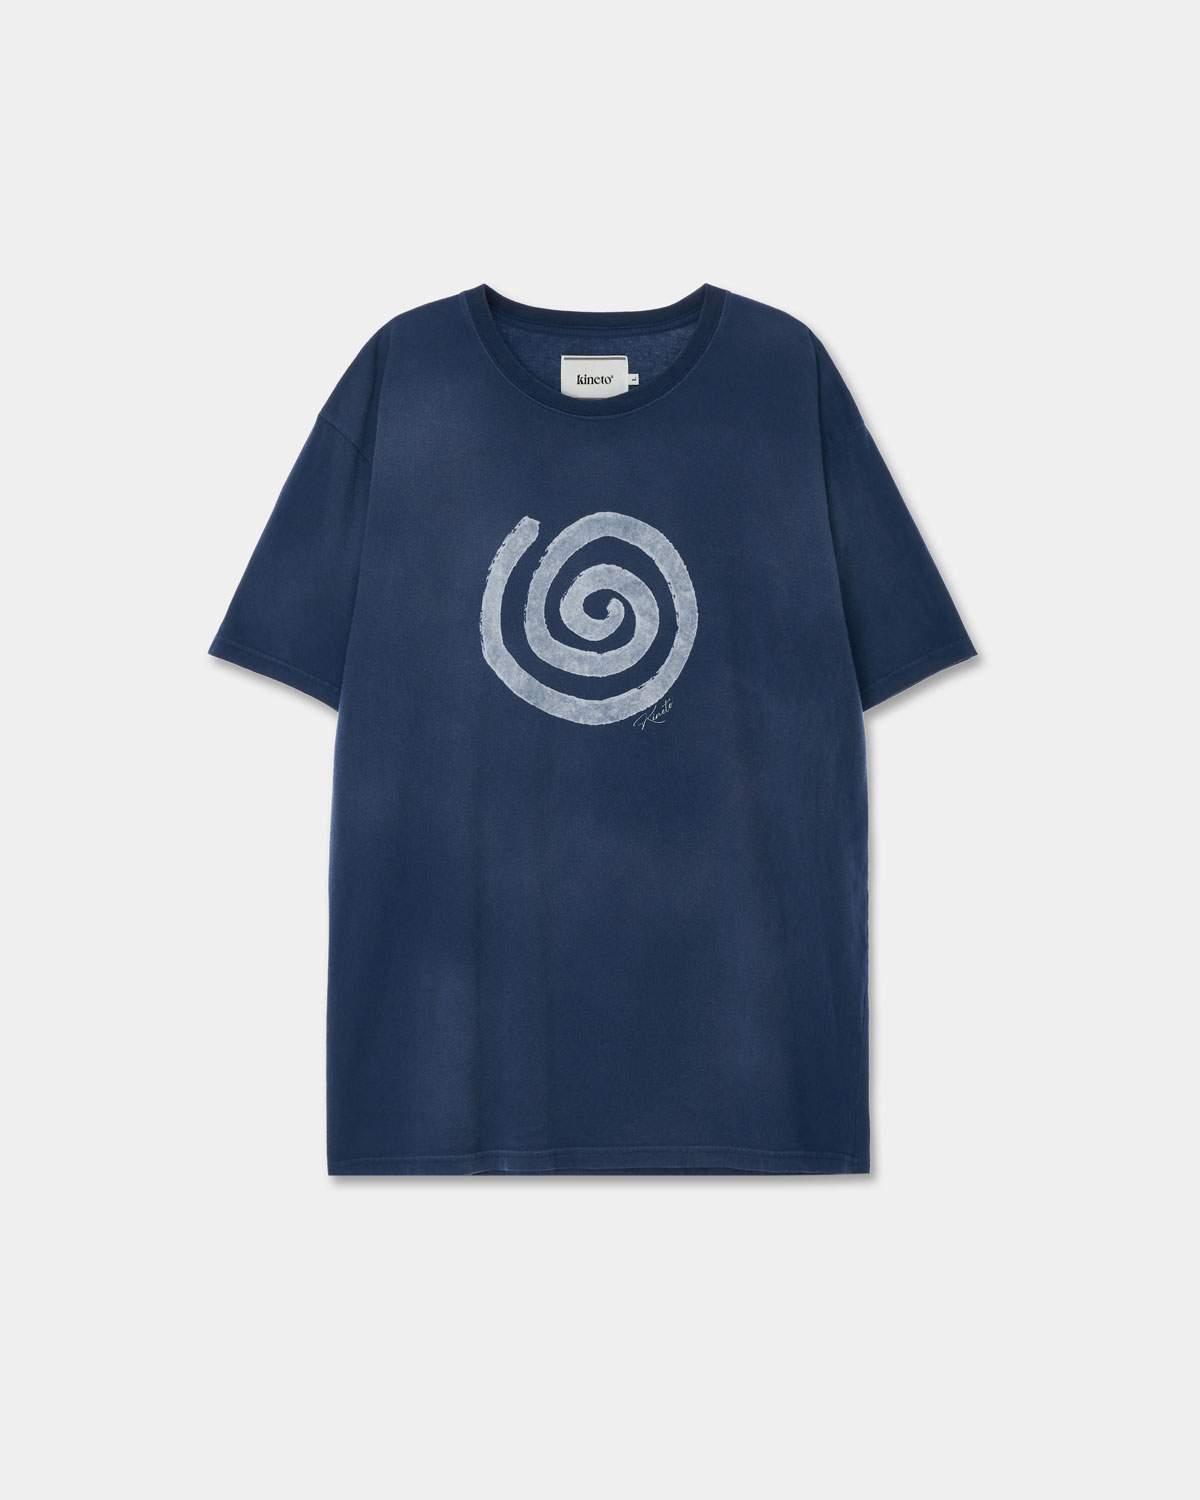 Sulfur Dyed Blow Wind Print T-Shirt _Dusty Blue_W_예약 배송 05/13